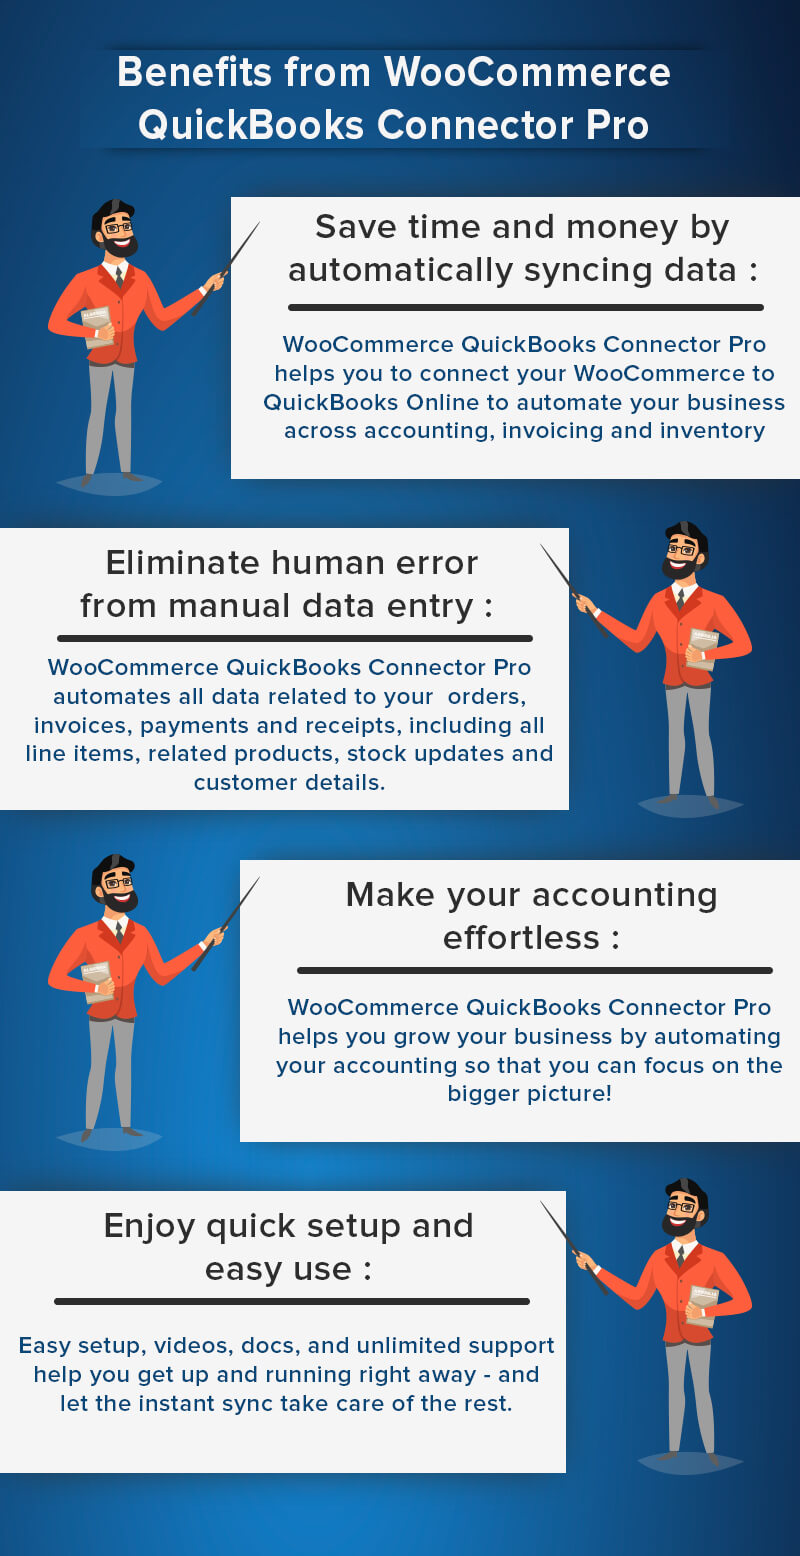 woocommerce-quickbooks-connector-pro-benefits